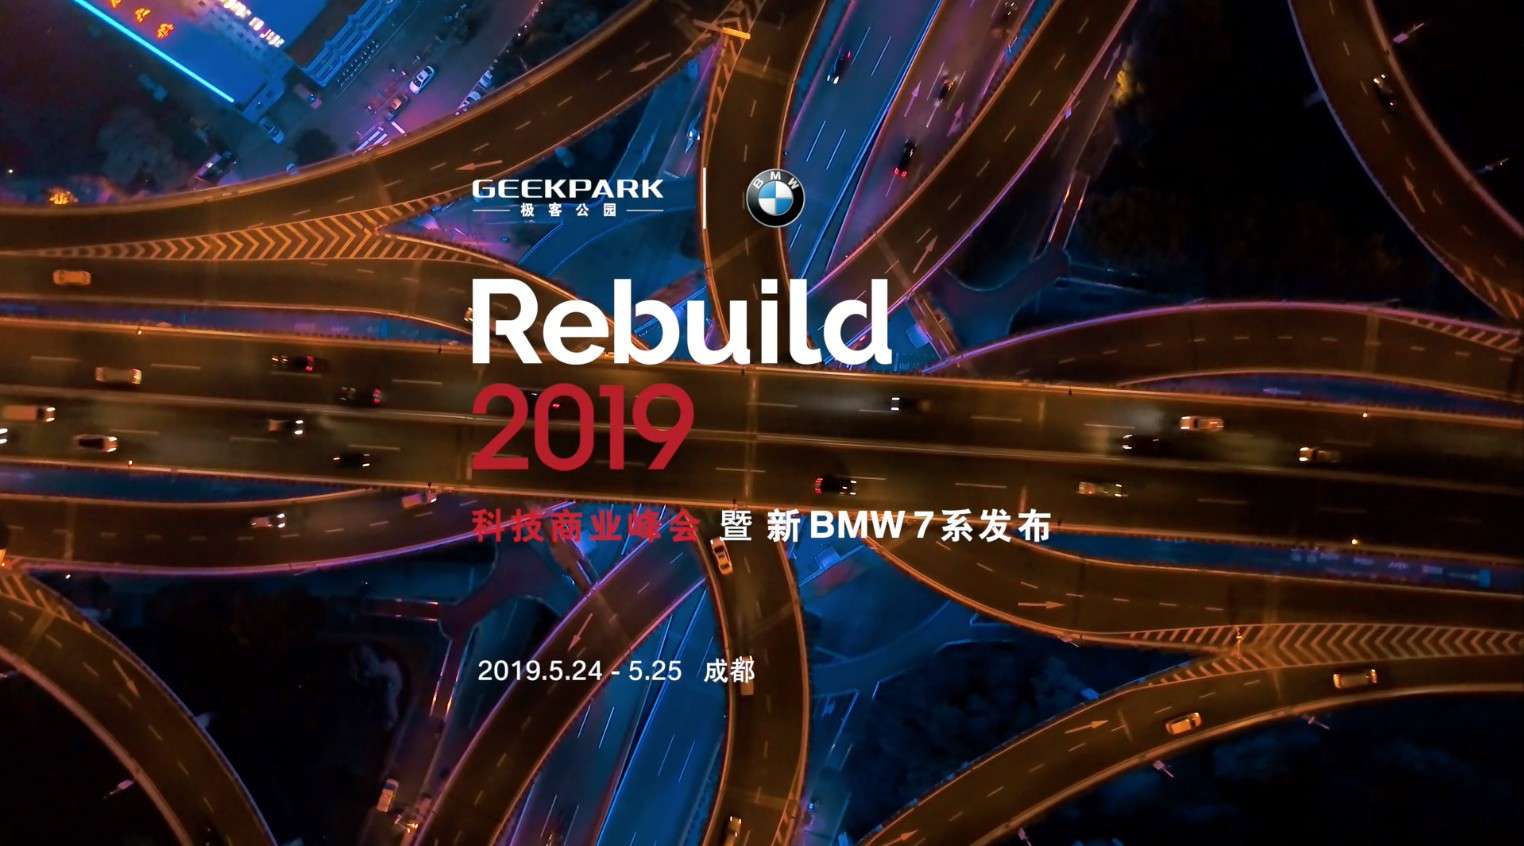 BMW · GeekPark Rebuild  2019